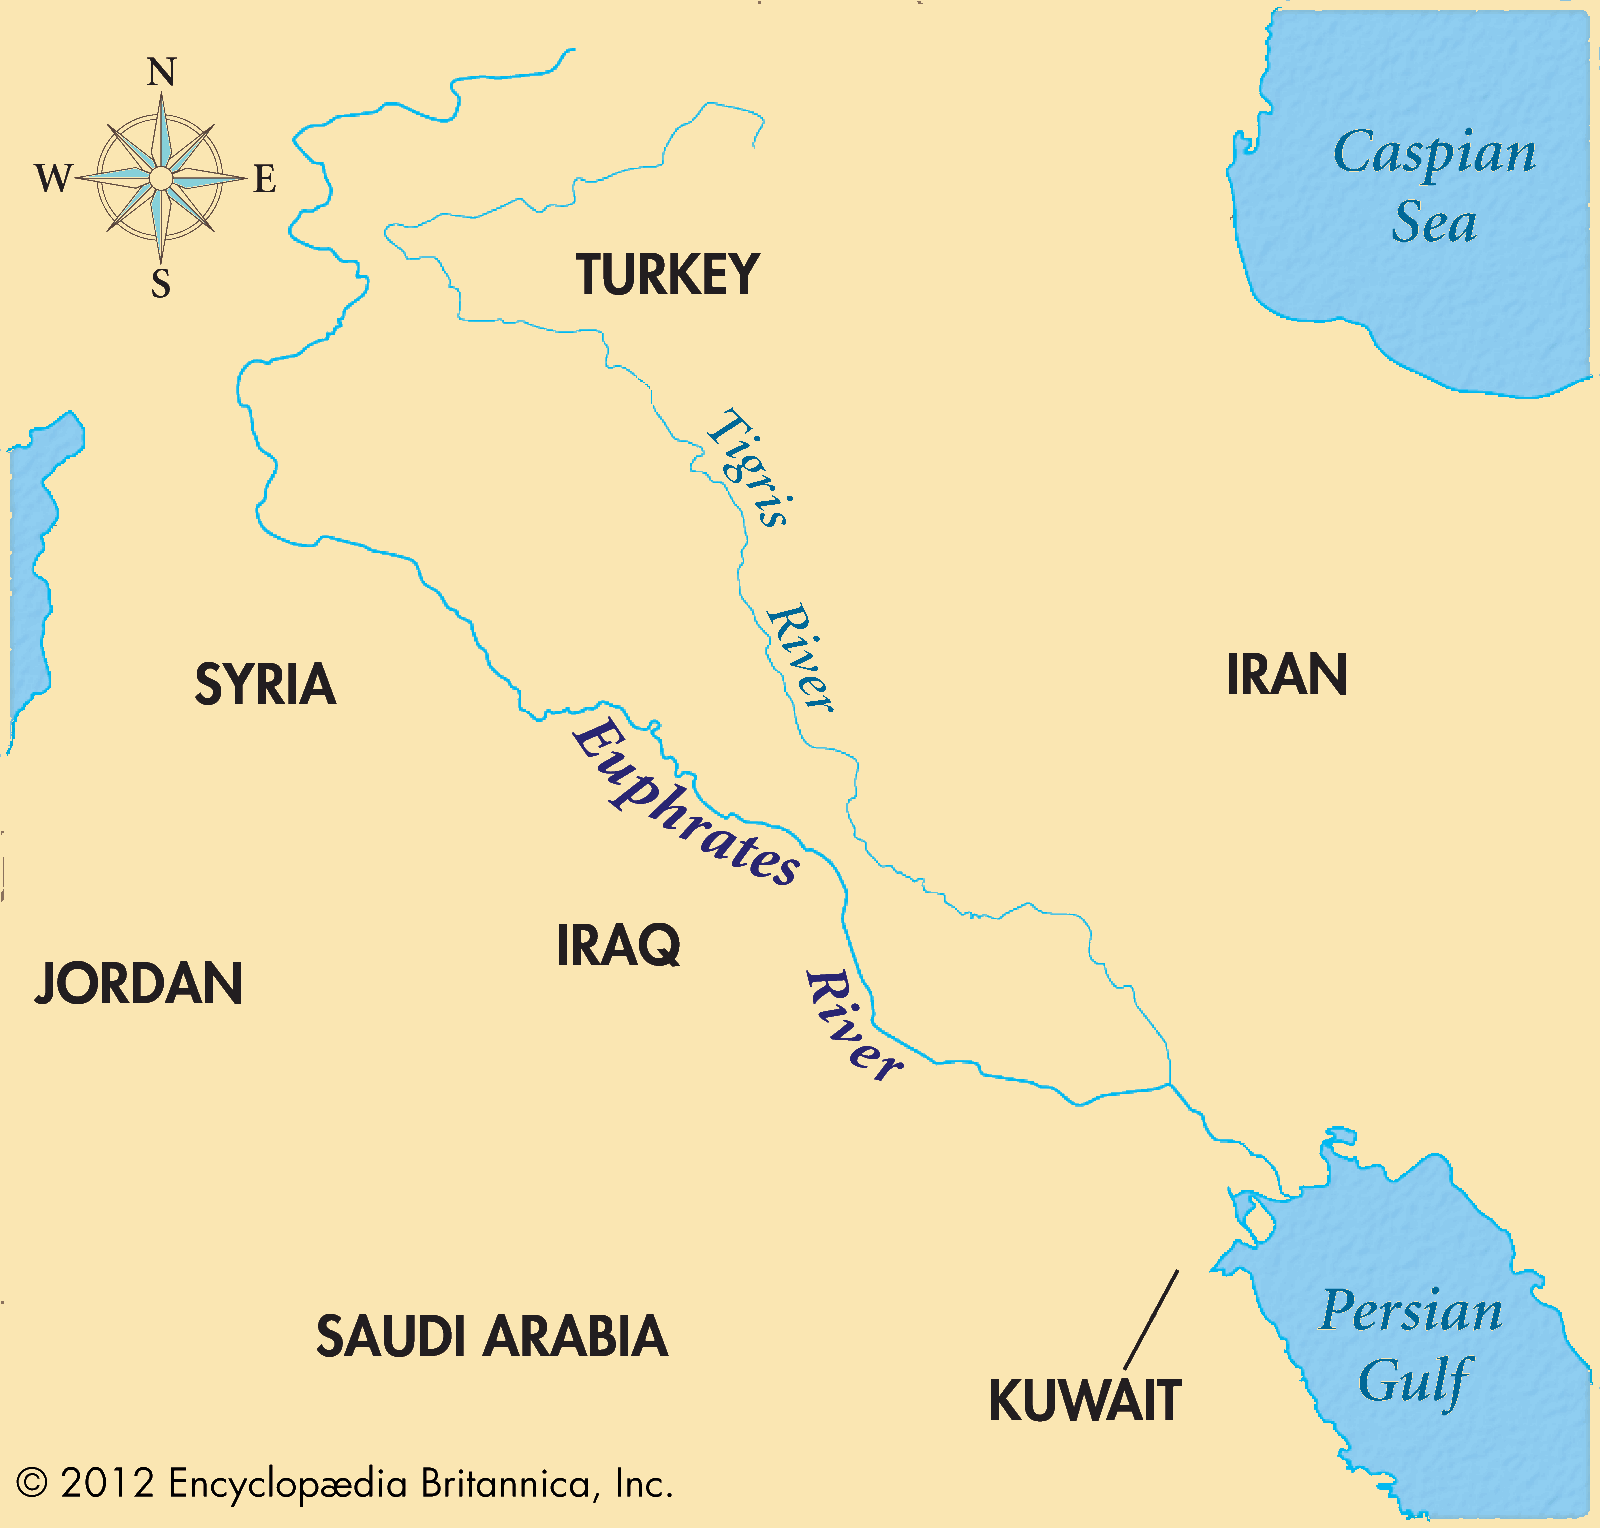 Реки тигр и евфрат в какой. Исток реки тигр и Евфрат на карте. Карта рек тигра и Евфрата. Река Евфрат на карте. Реки тигр и Евфрат на карте Турции.